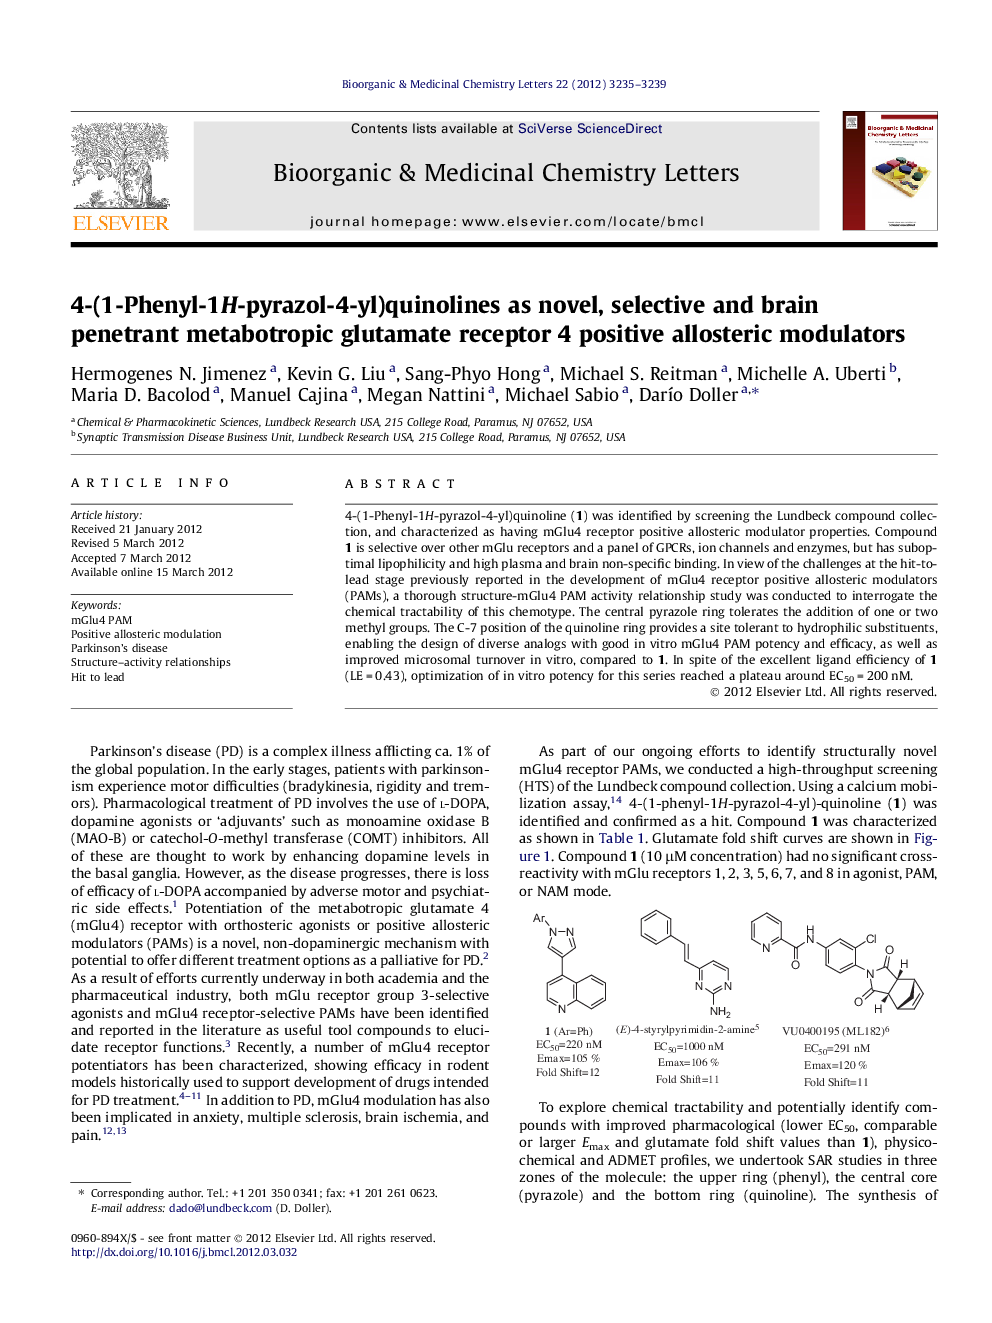 4-(1-Phenyl-1H-pyrazol-4-yl)quinolines as novel, selective and brain penetrant metabotropic glutamate receptor 4 positive allosteric modulators